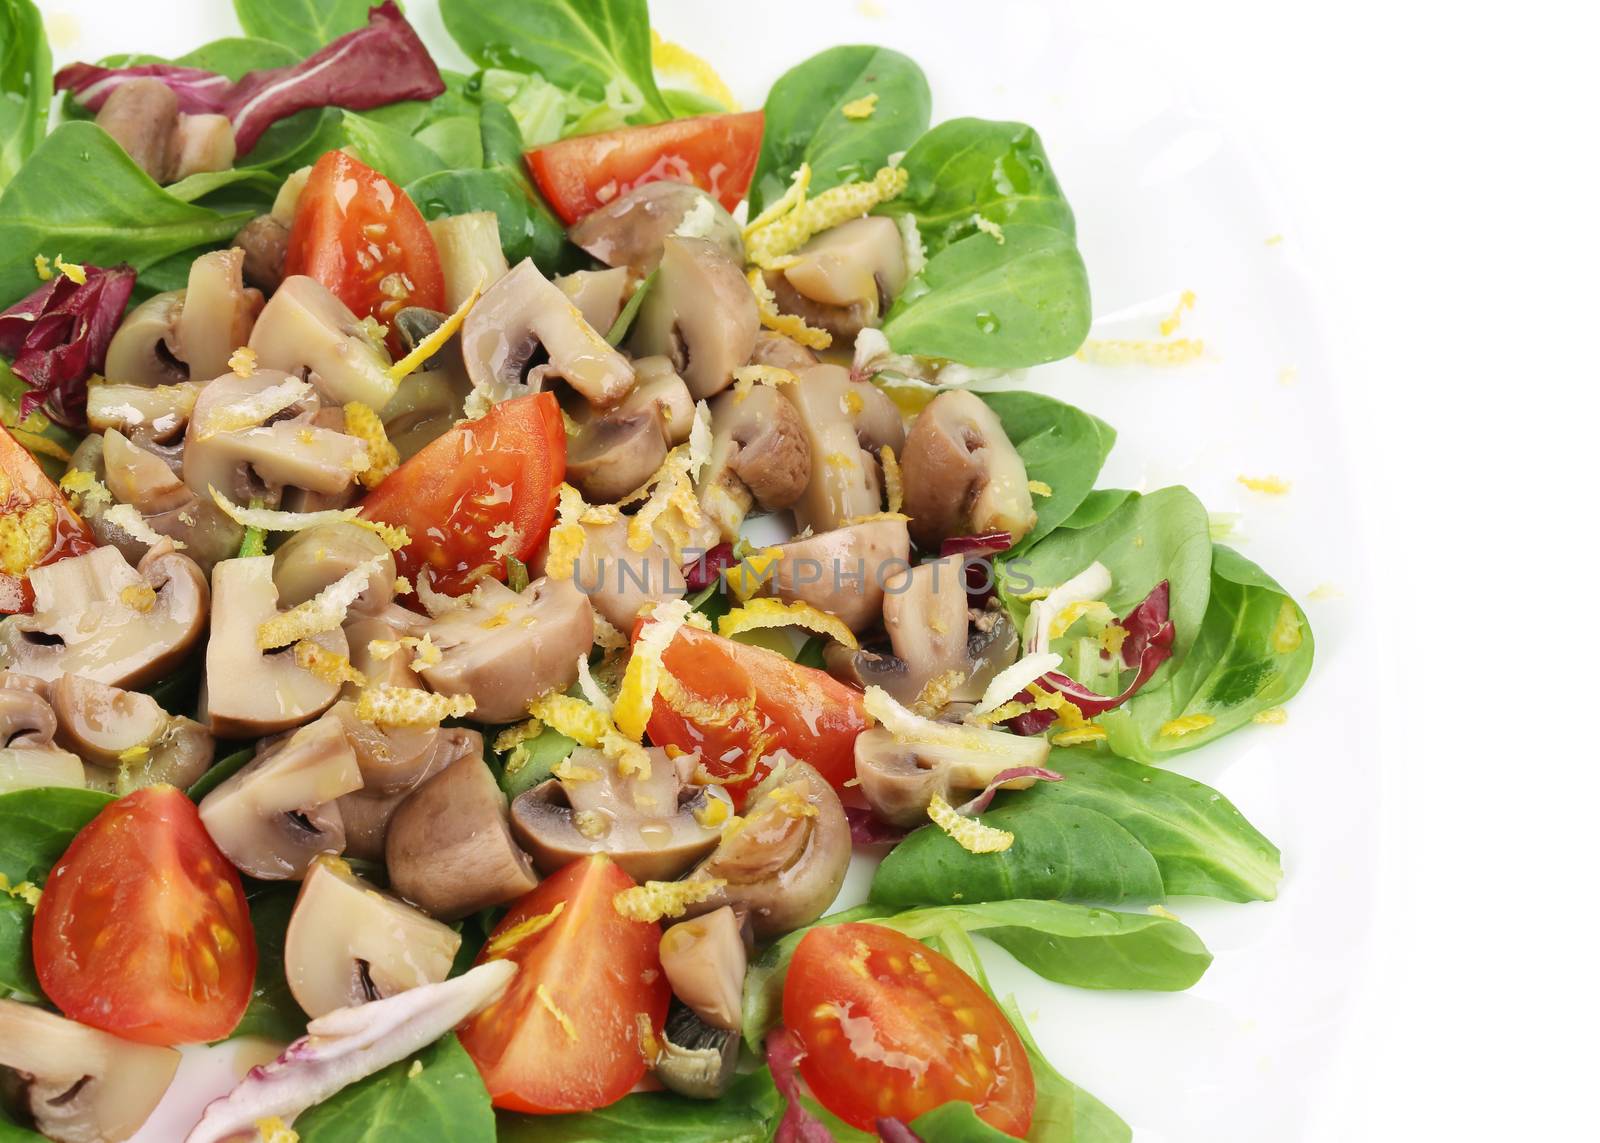 Mushroom salad with walnuts and tomatoes. by indigolotos